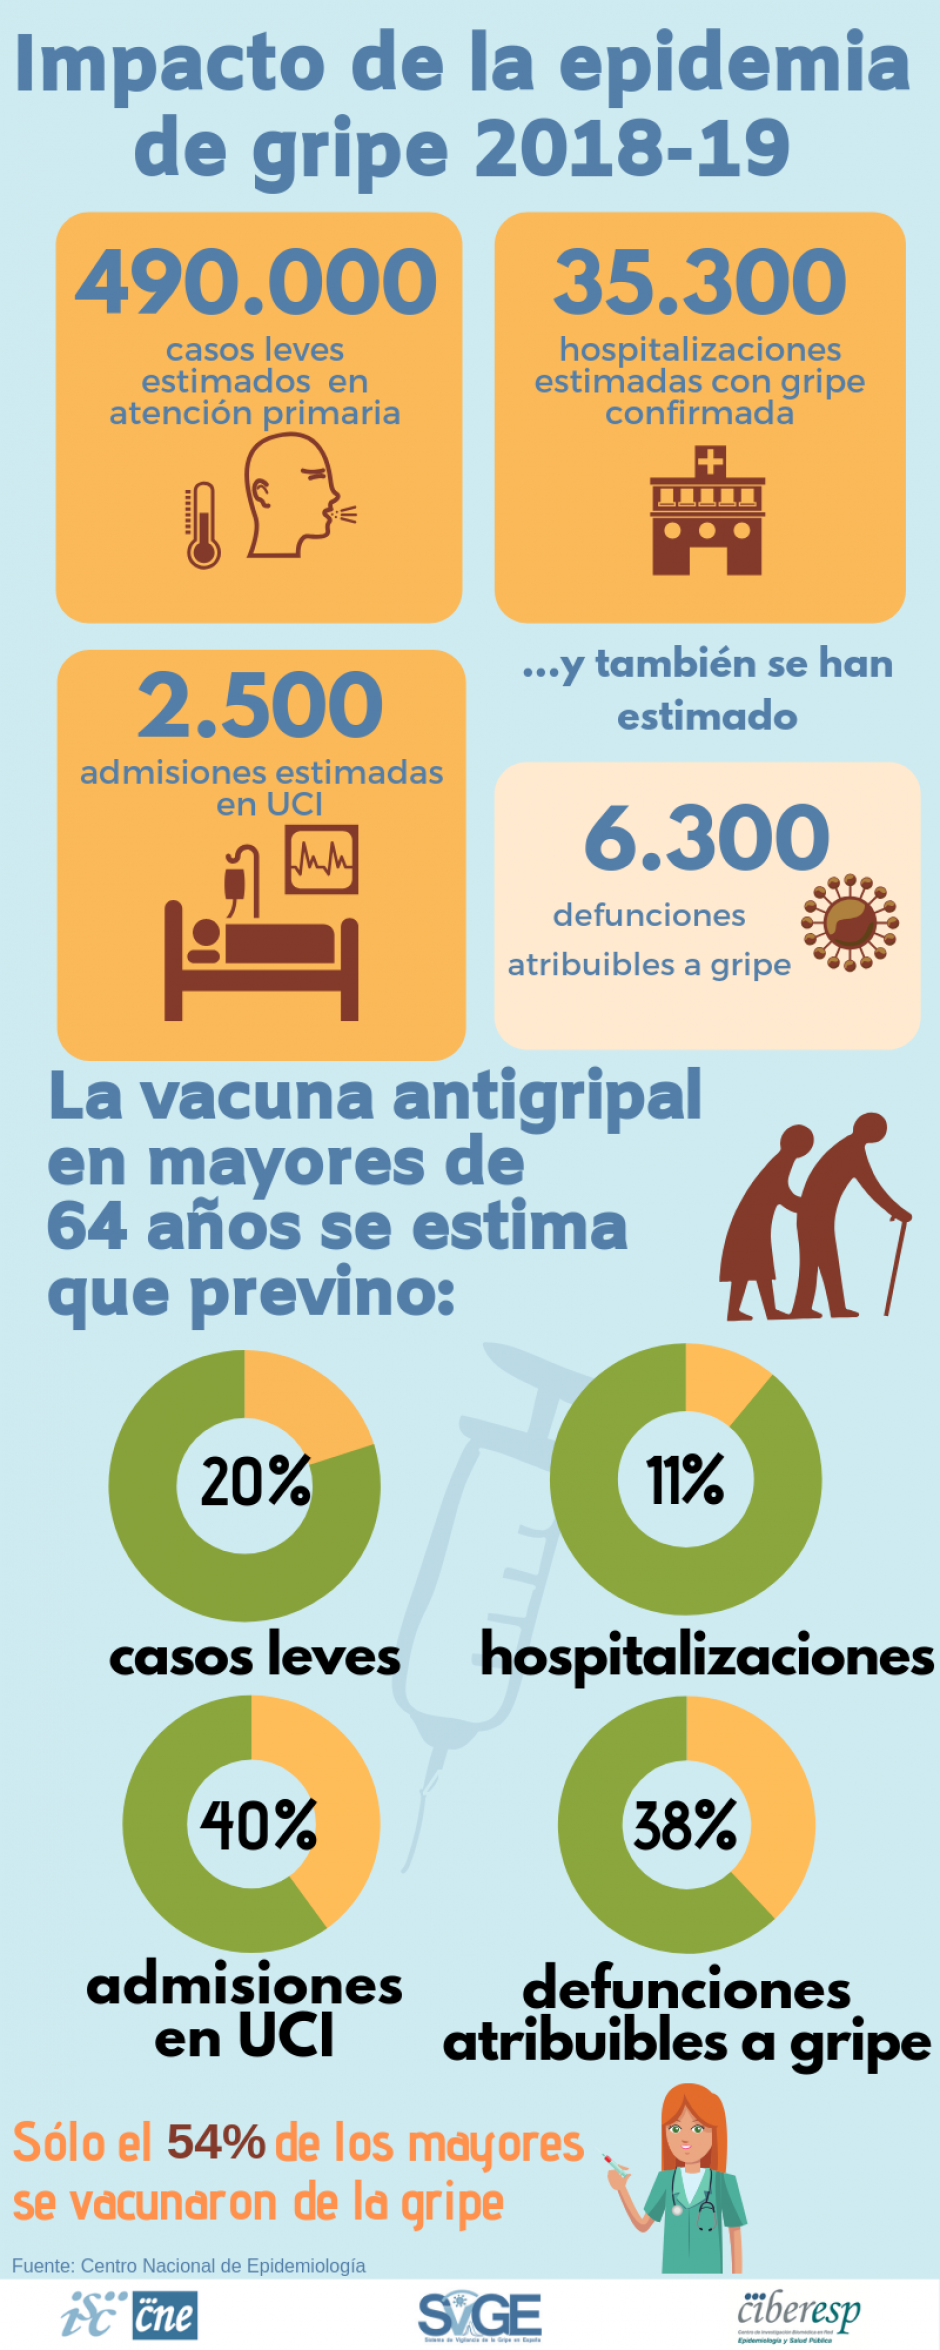 Impacto de la gripe en España 2018-2019